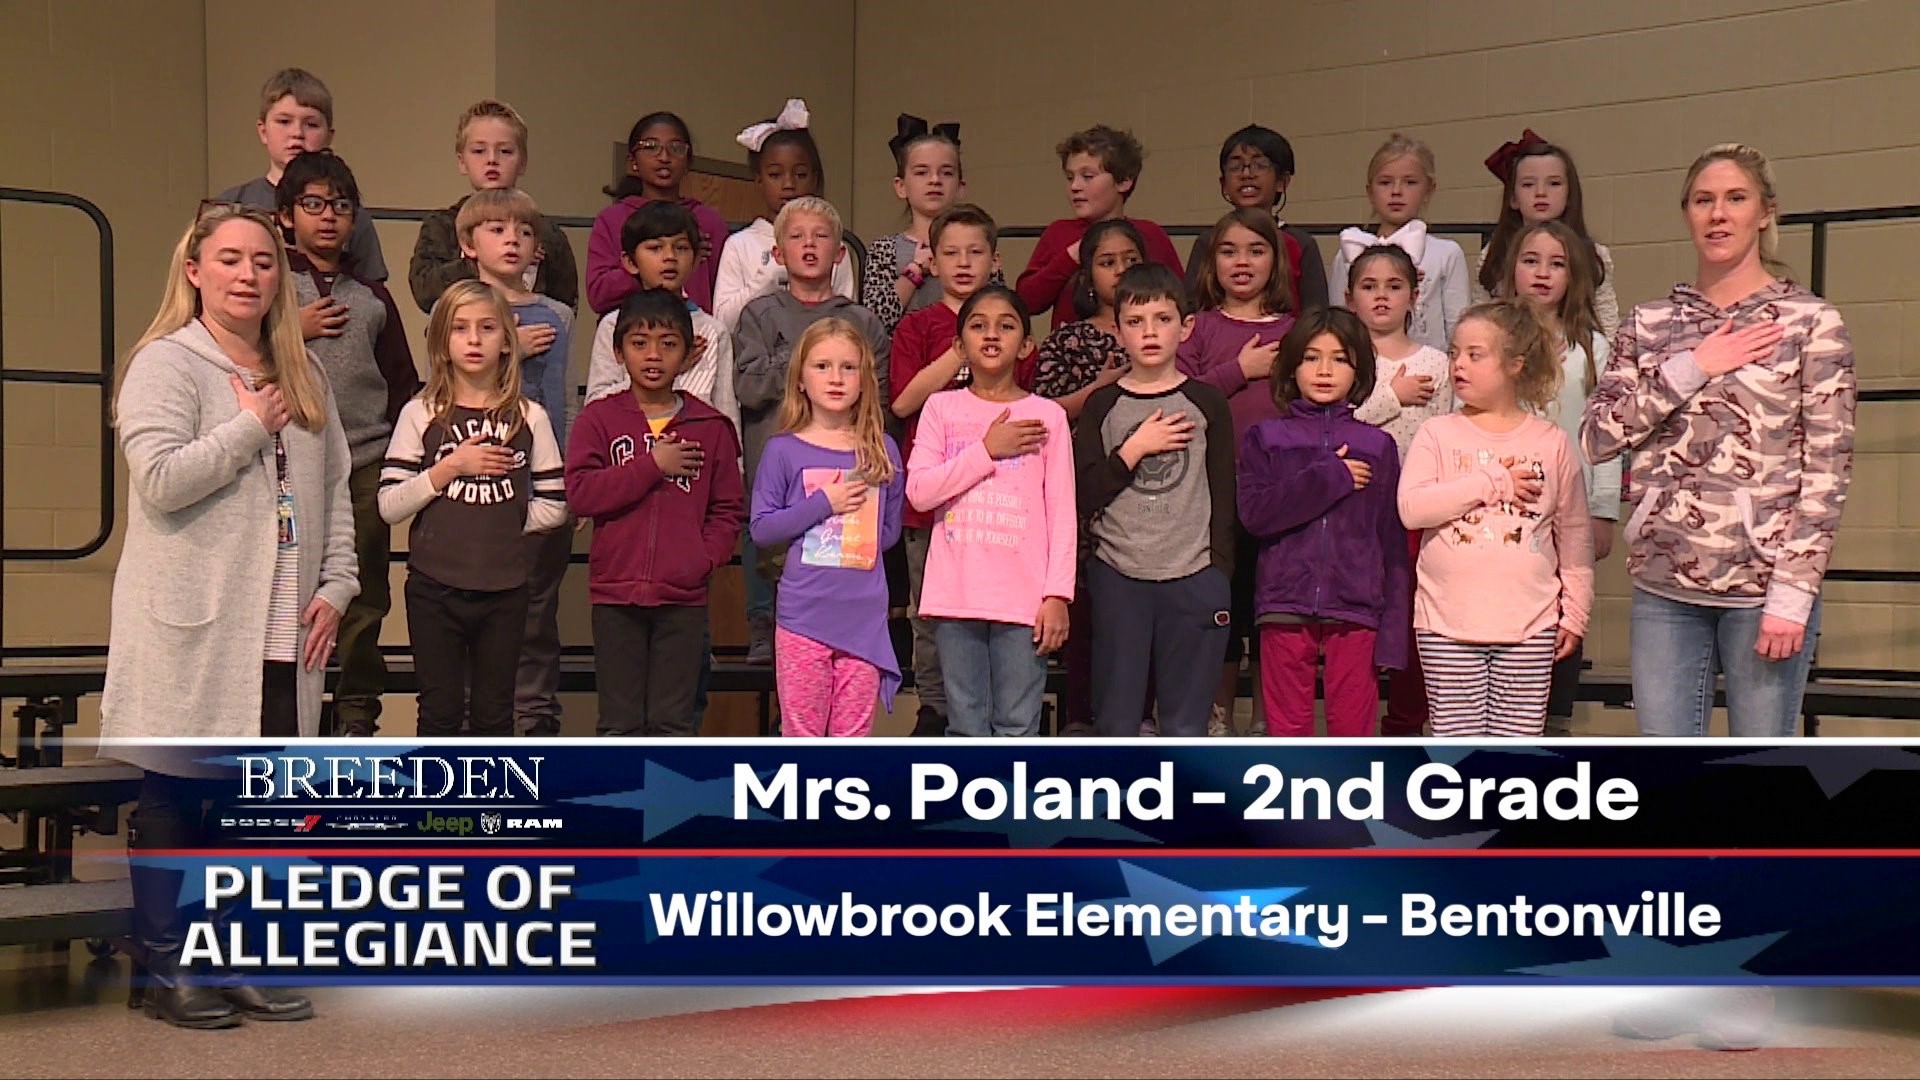 Mrs. Poland 2nd Grade Willowbrook Elementary, Bentonville